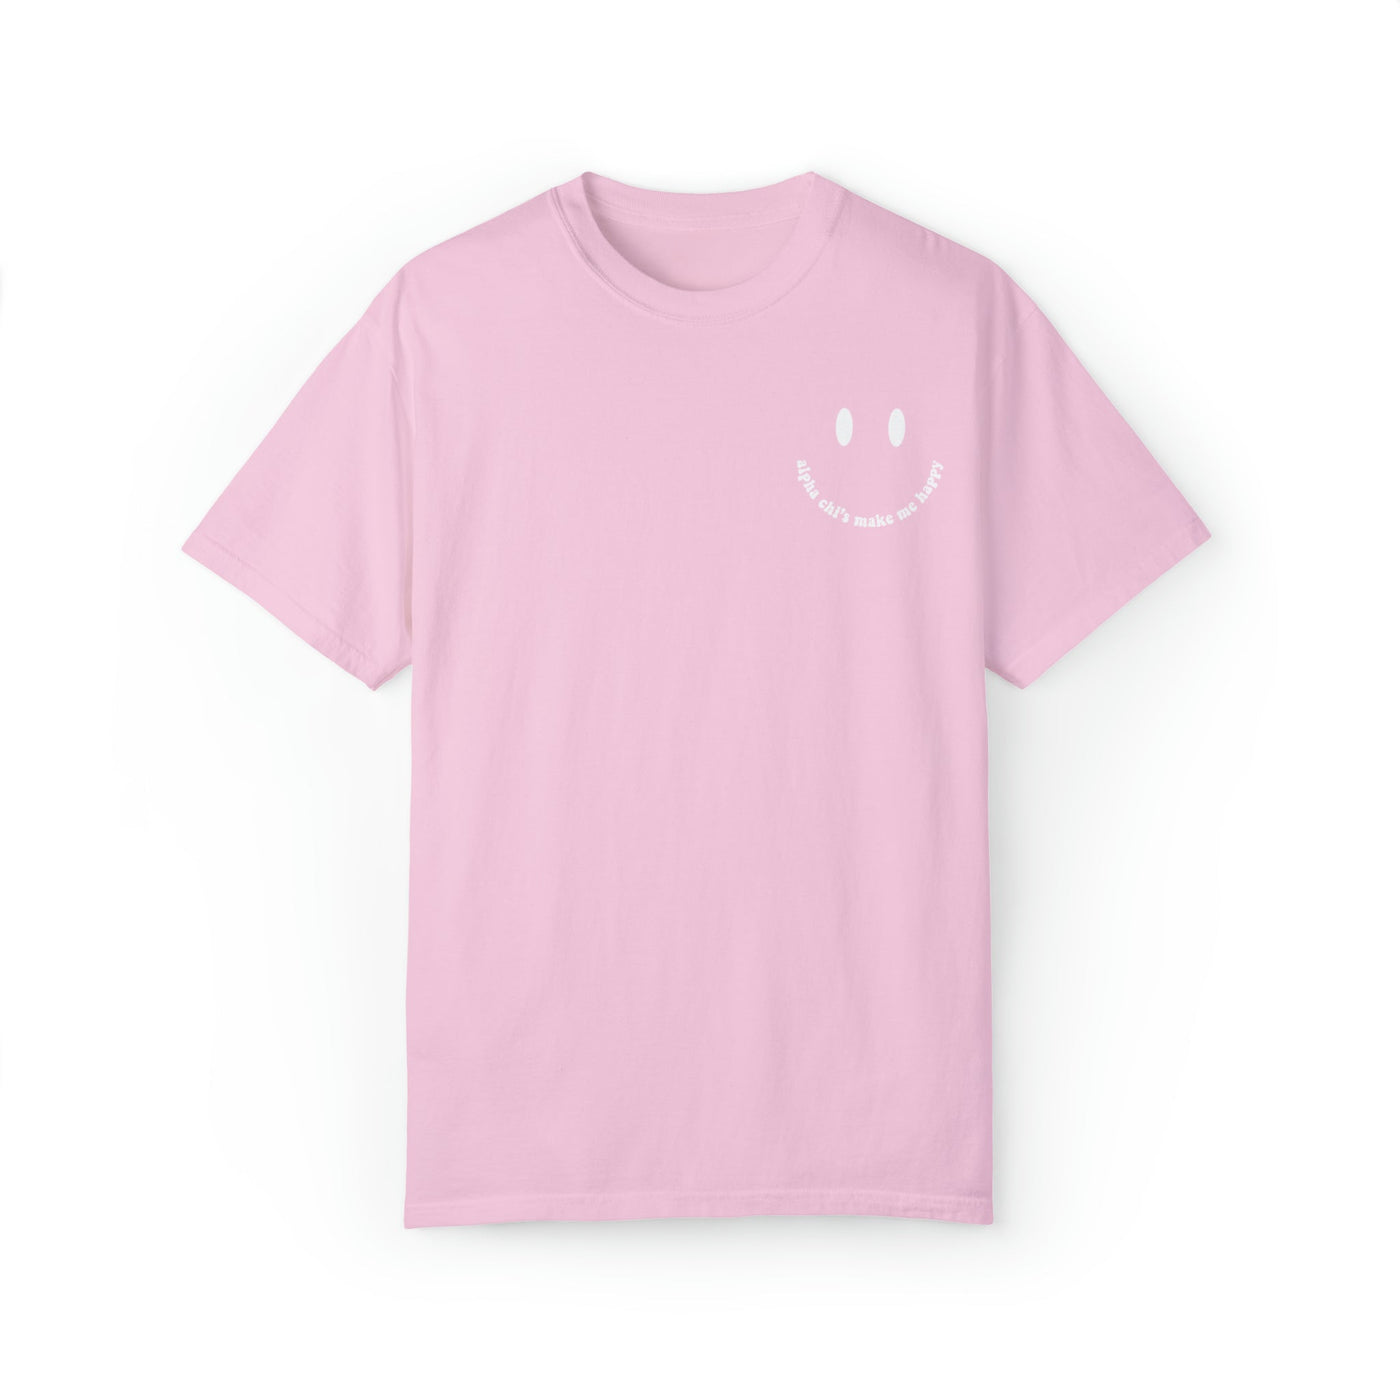 Alpha Chi Omega's Make Me Happy Sorority Comfy T-shirt